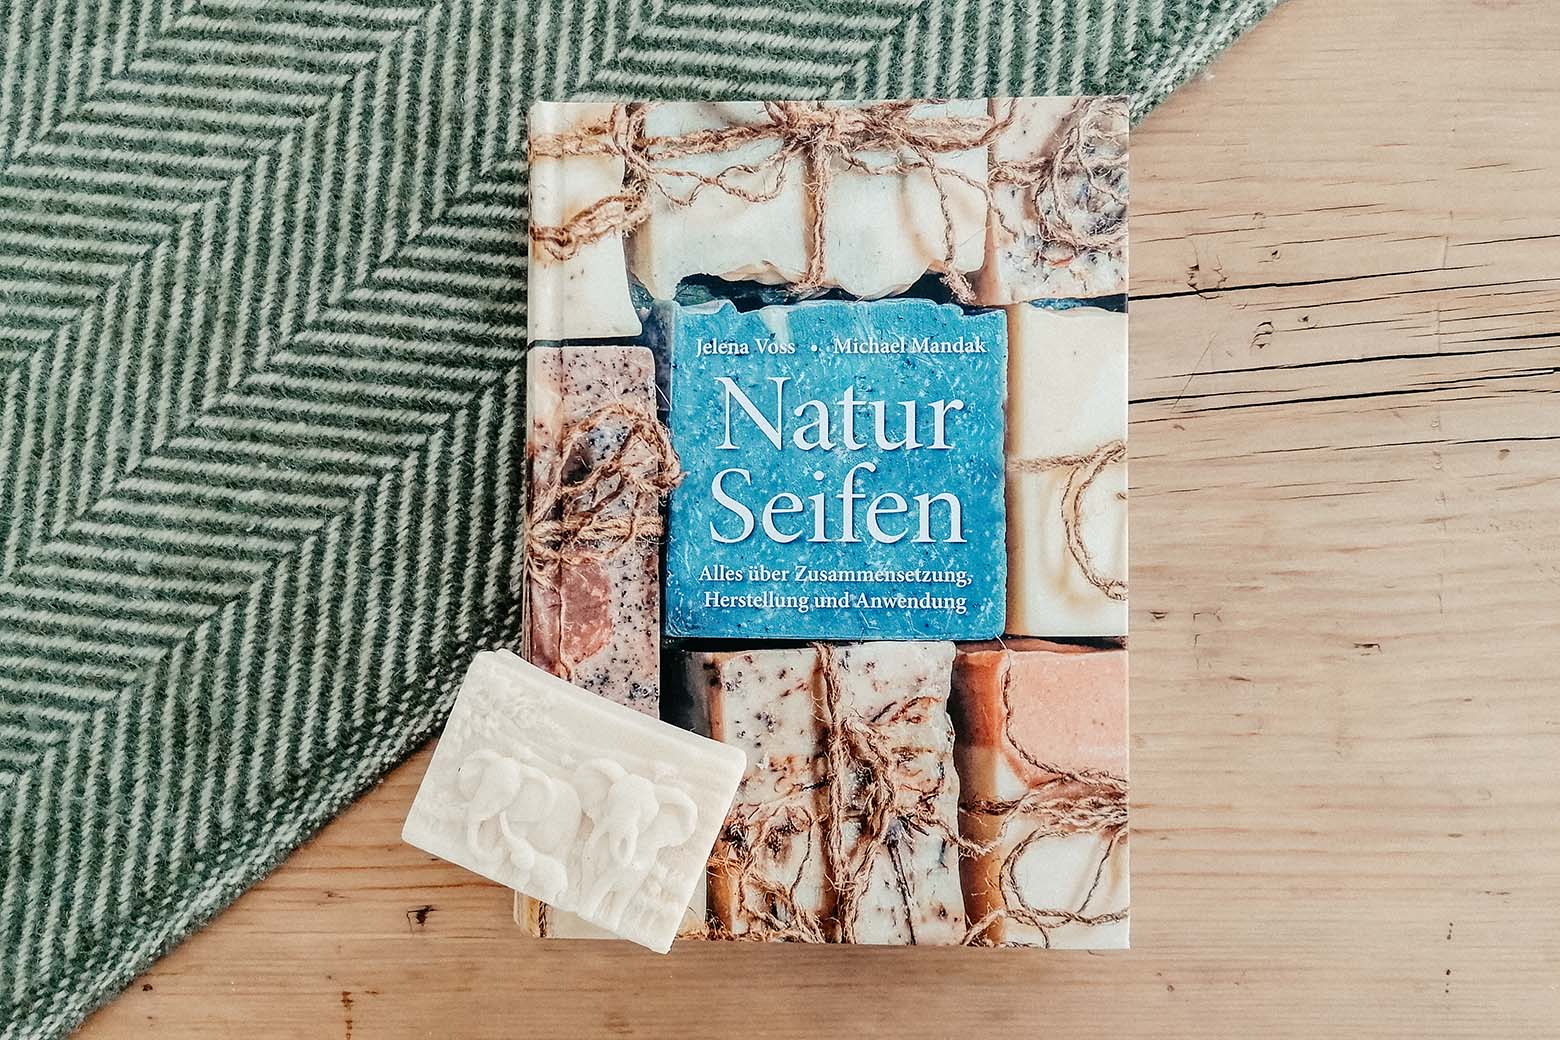 Jelena Voss, Michael Mandak: Naturseifen